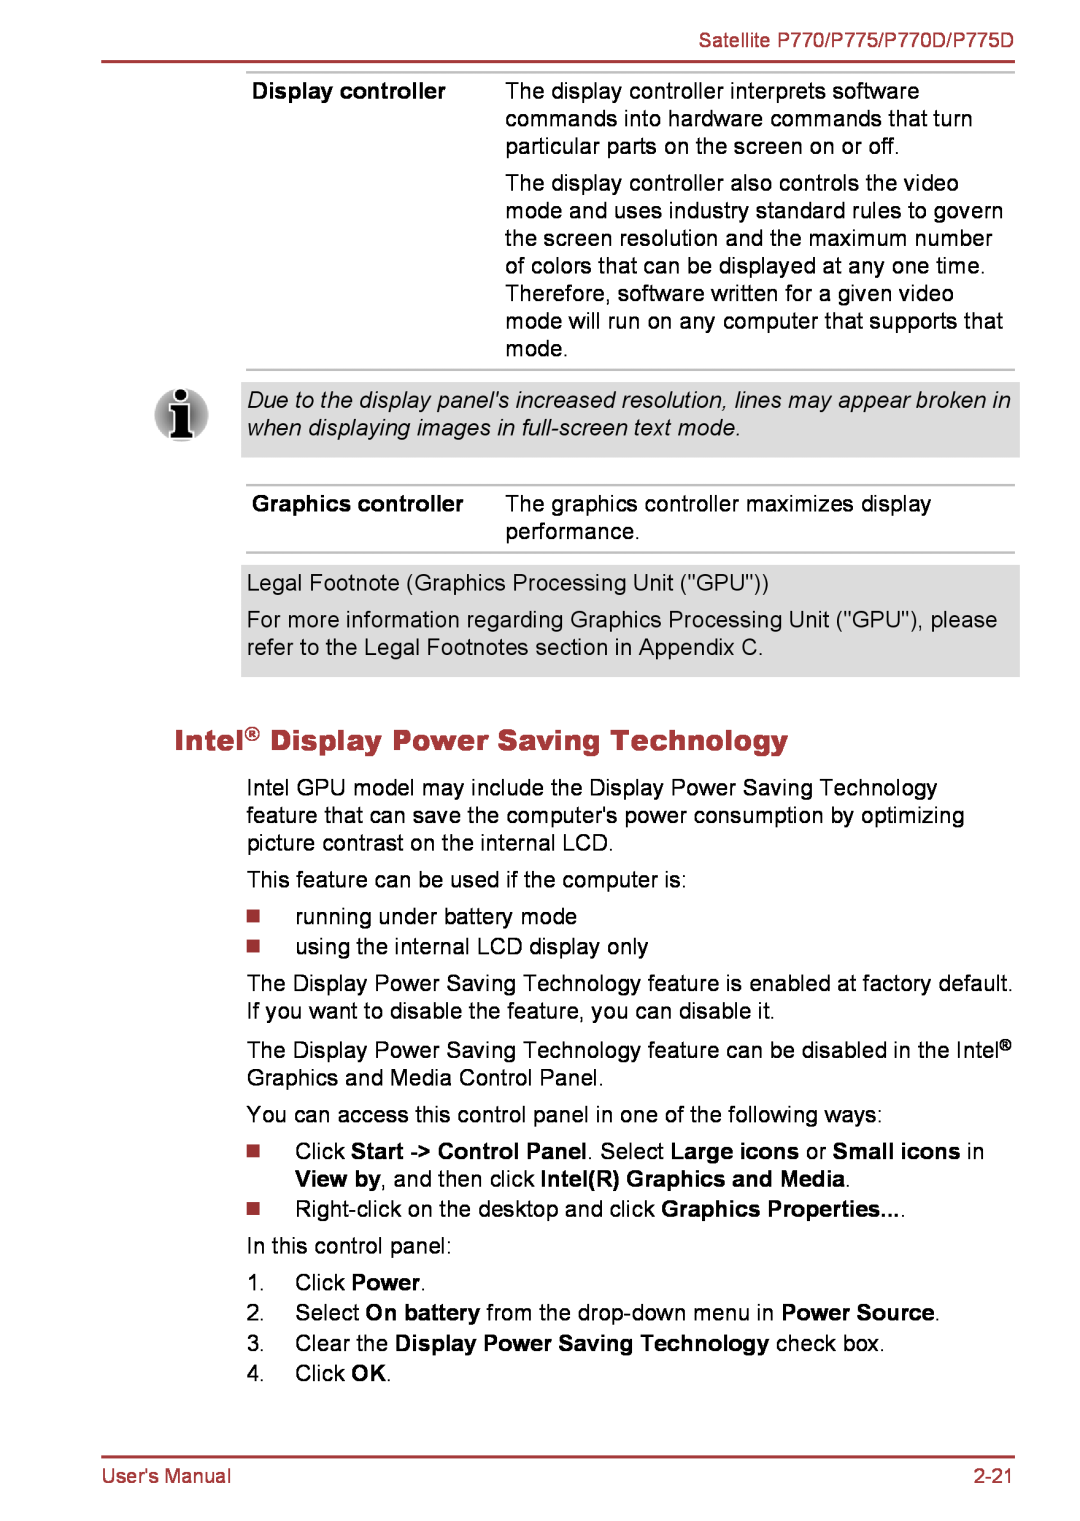 Toshiba P770 user manual Intel Display Power Saving Technology, Clear the Display Power Saving Technology check box 